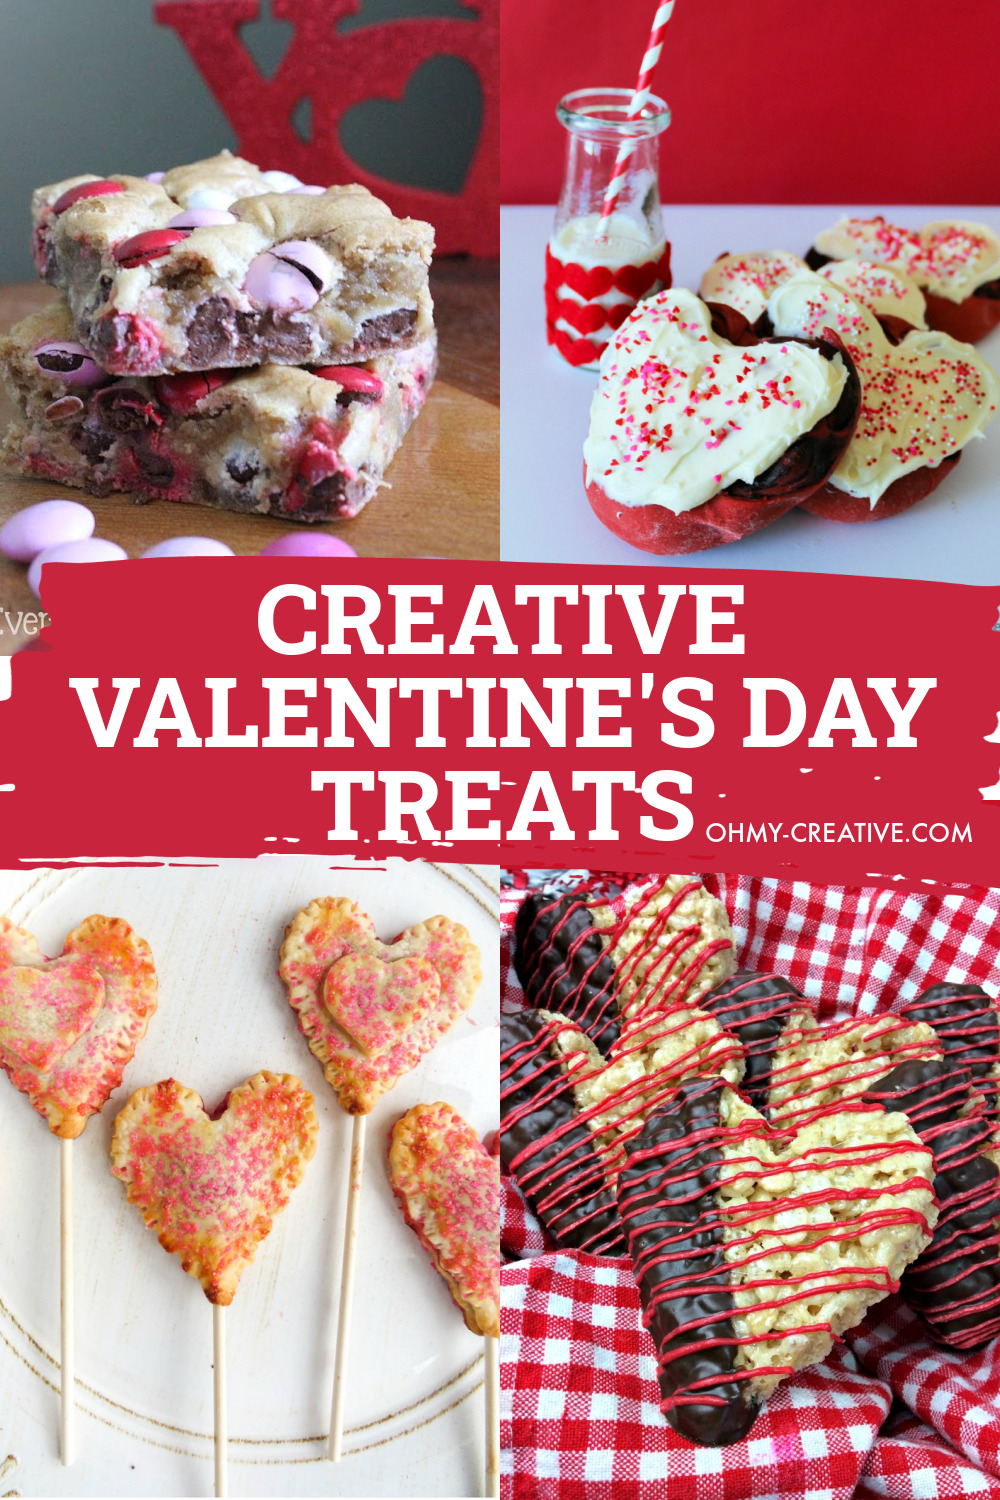 Tasty creative Valentine's Day ideas and treats including heart coffee cakes, heart shaped pies, heart shaped rice krispie treats.